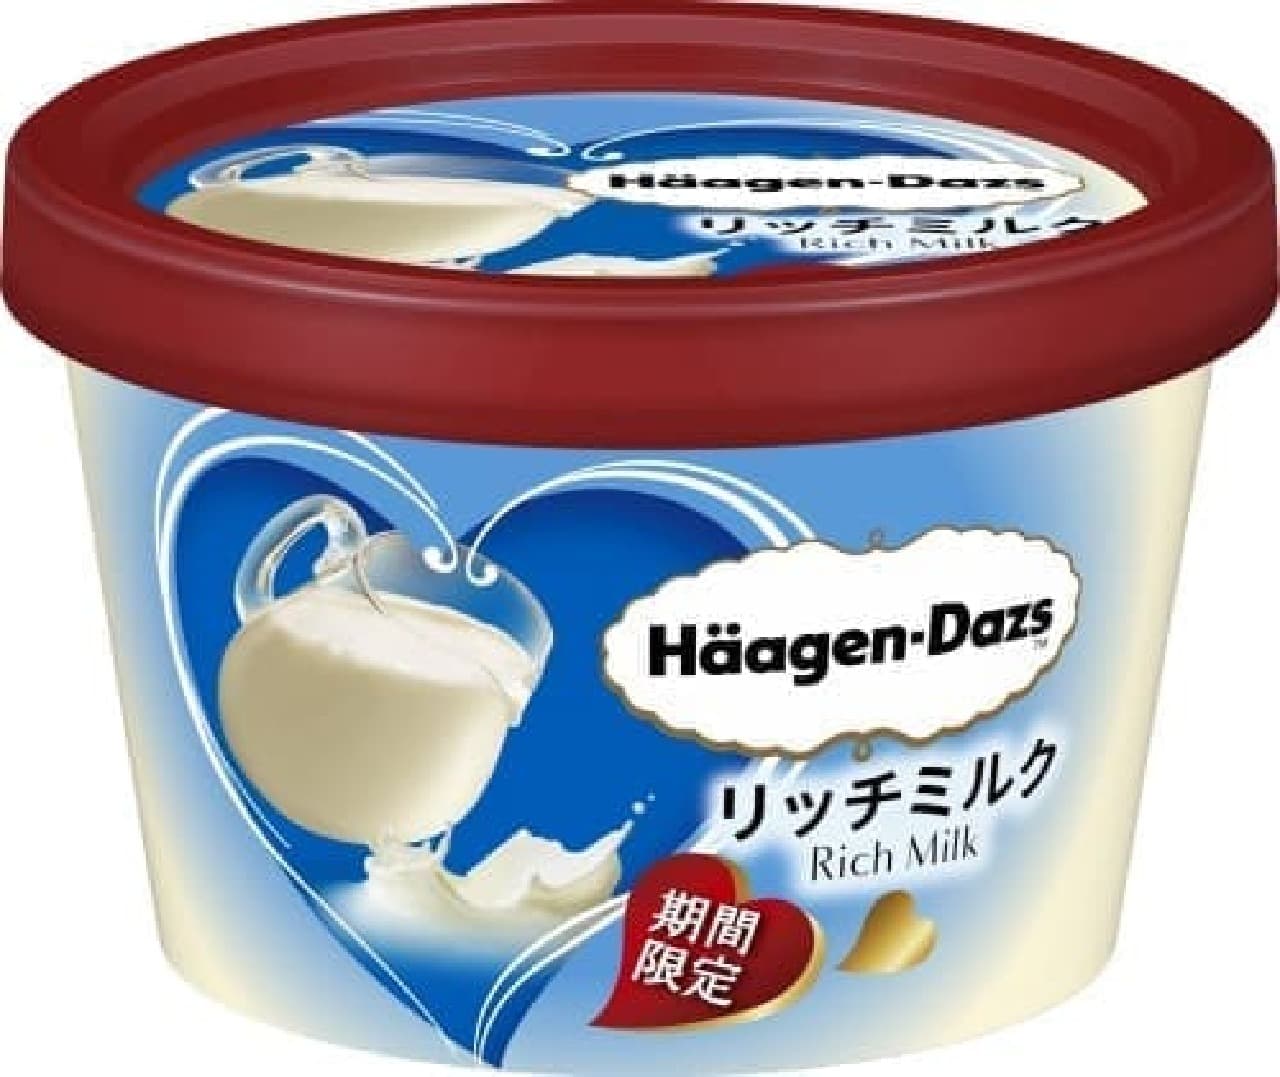 Haagen-Dazs Mini Cup "Rich Milk"